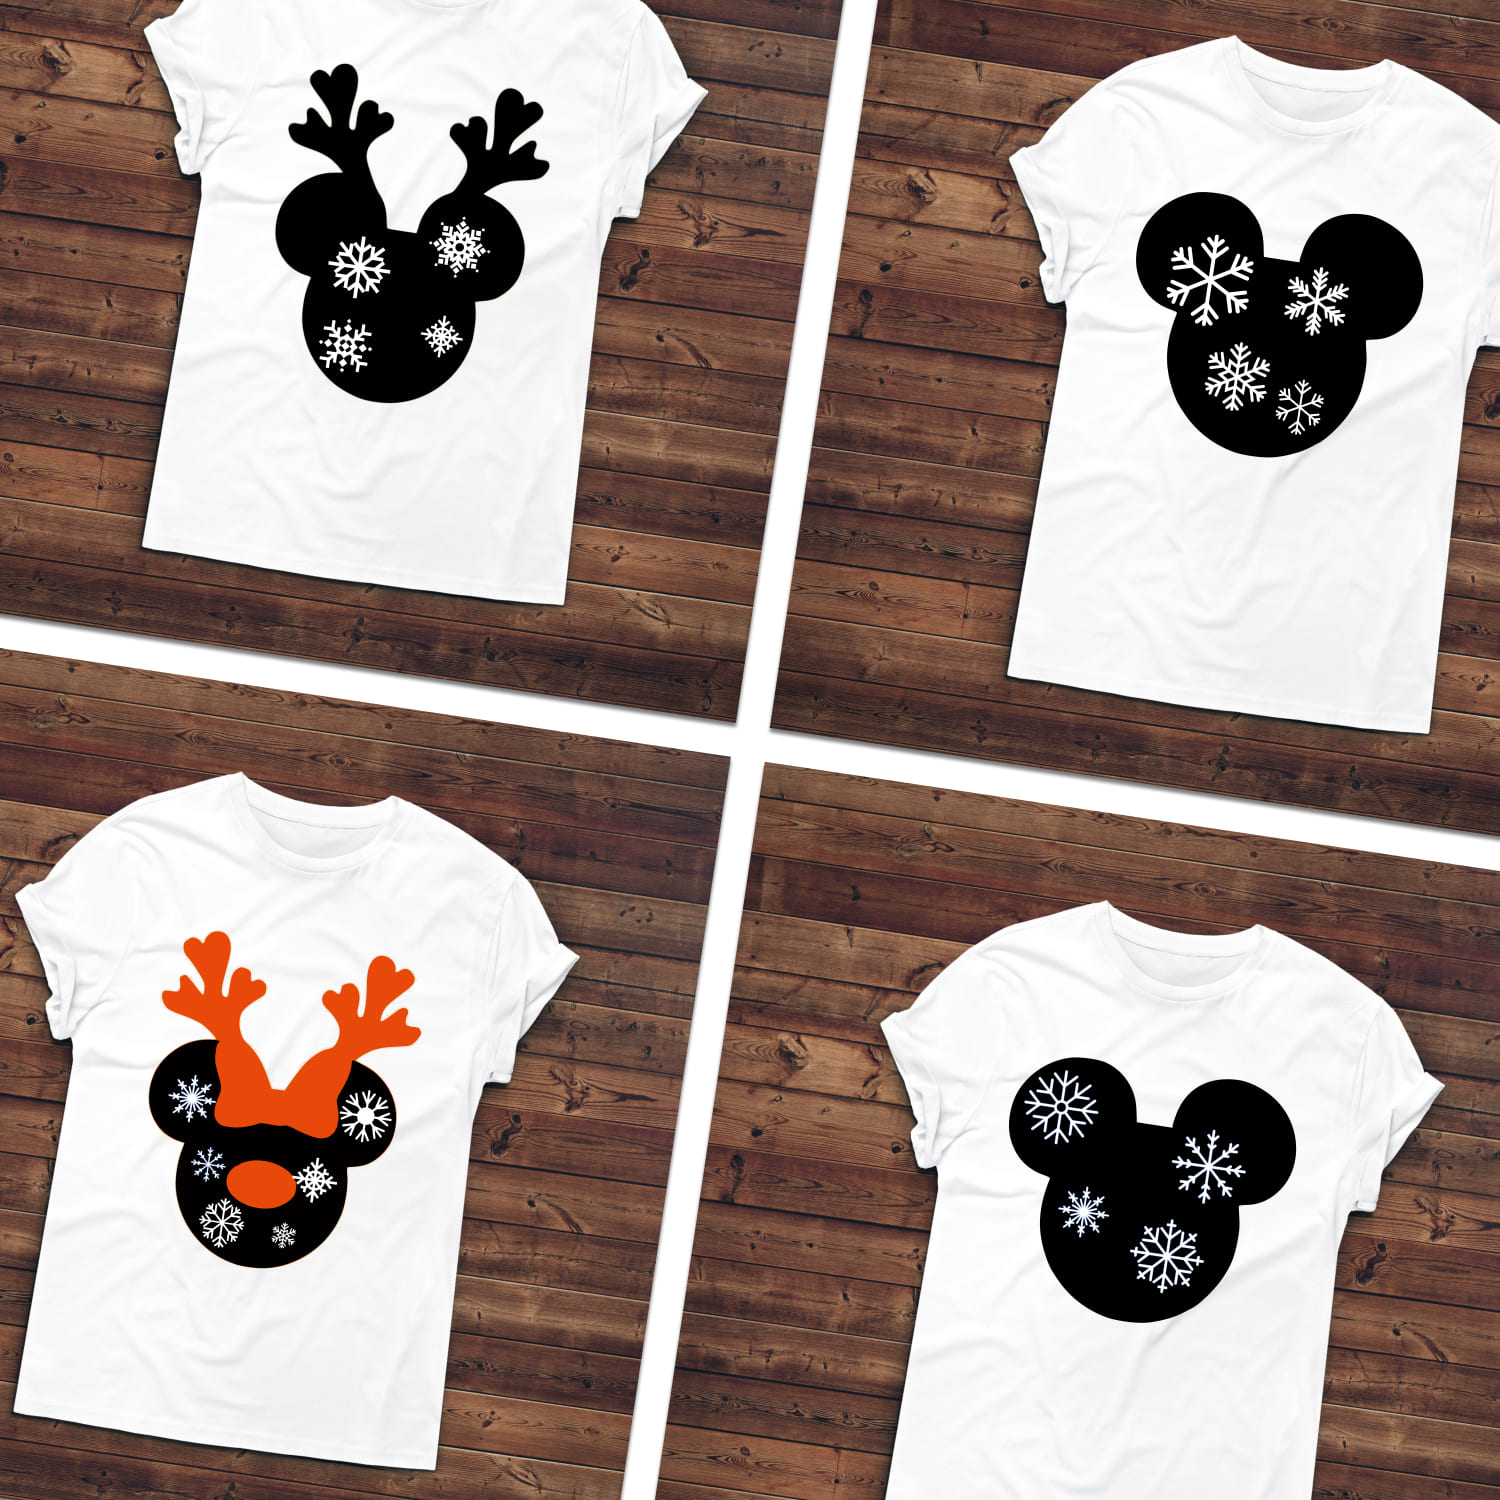 Disney Snowflake SVG T-shirt Designs cover.